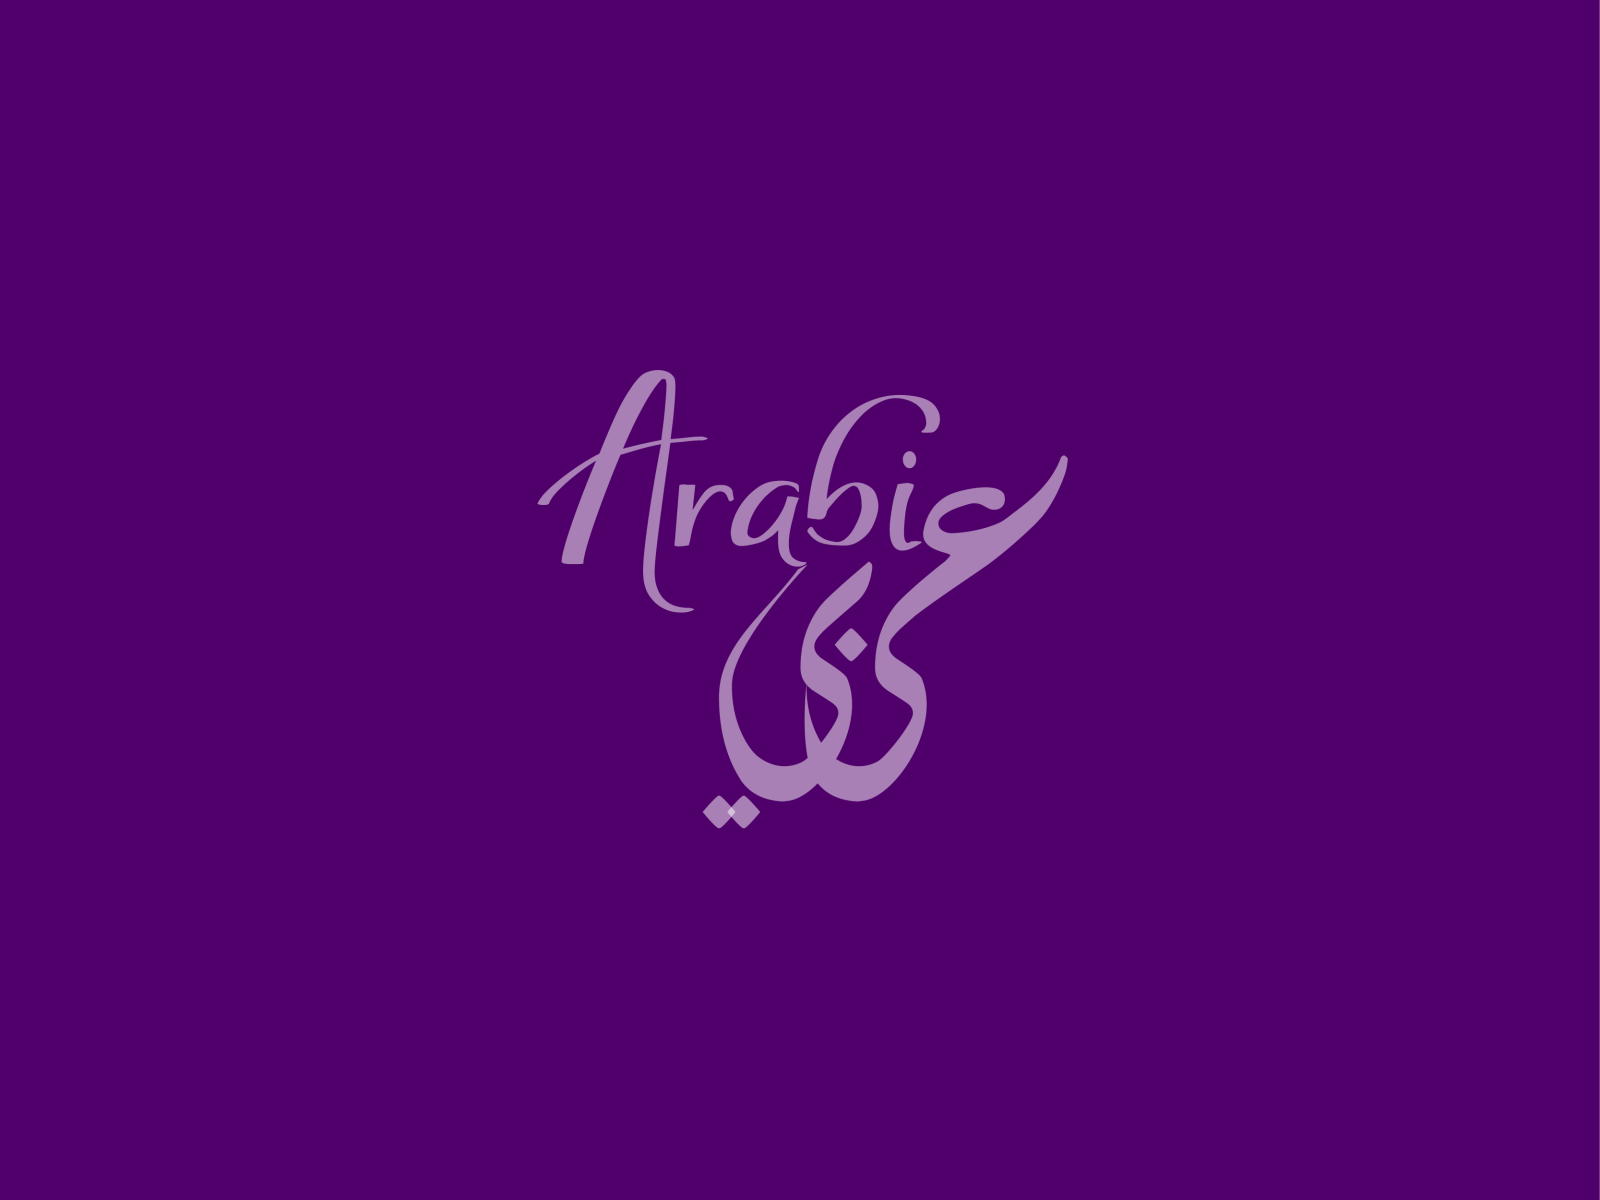 National Day for Arabic Language by Raied Al Jolayfi on Dribbble